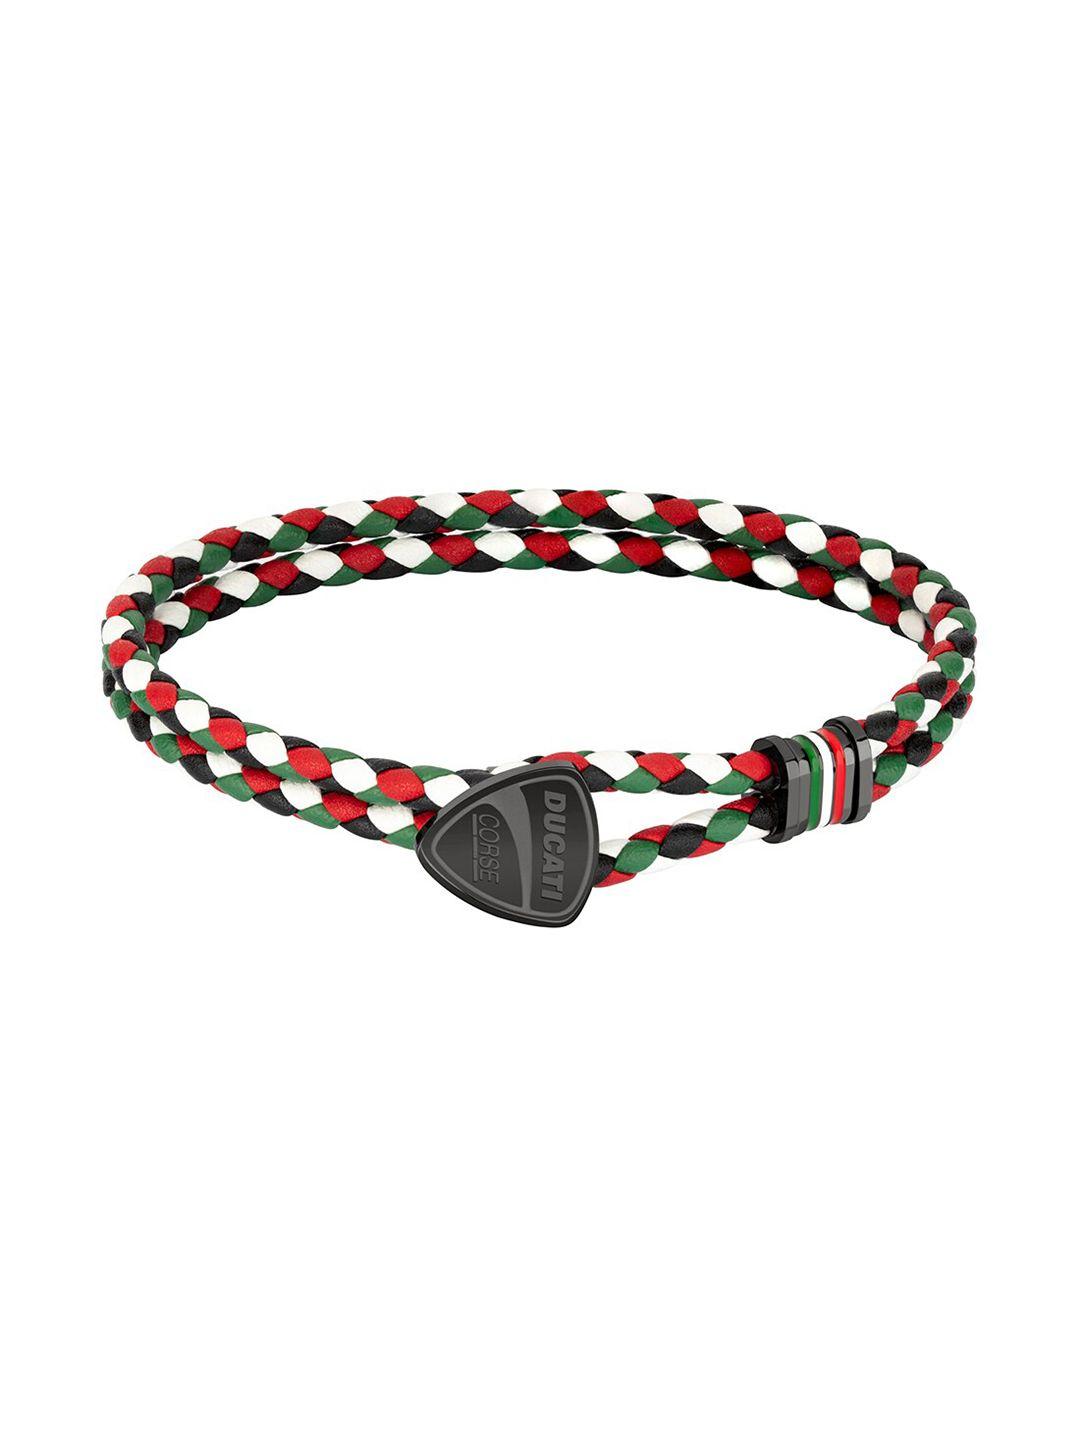 ducati corse men grey & red leather cuff bracelet